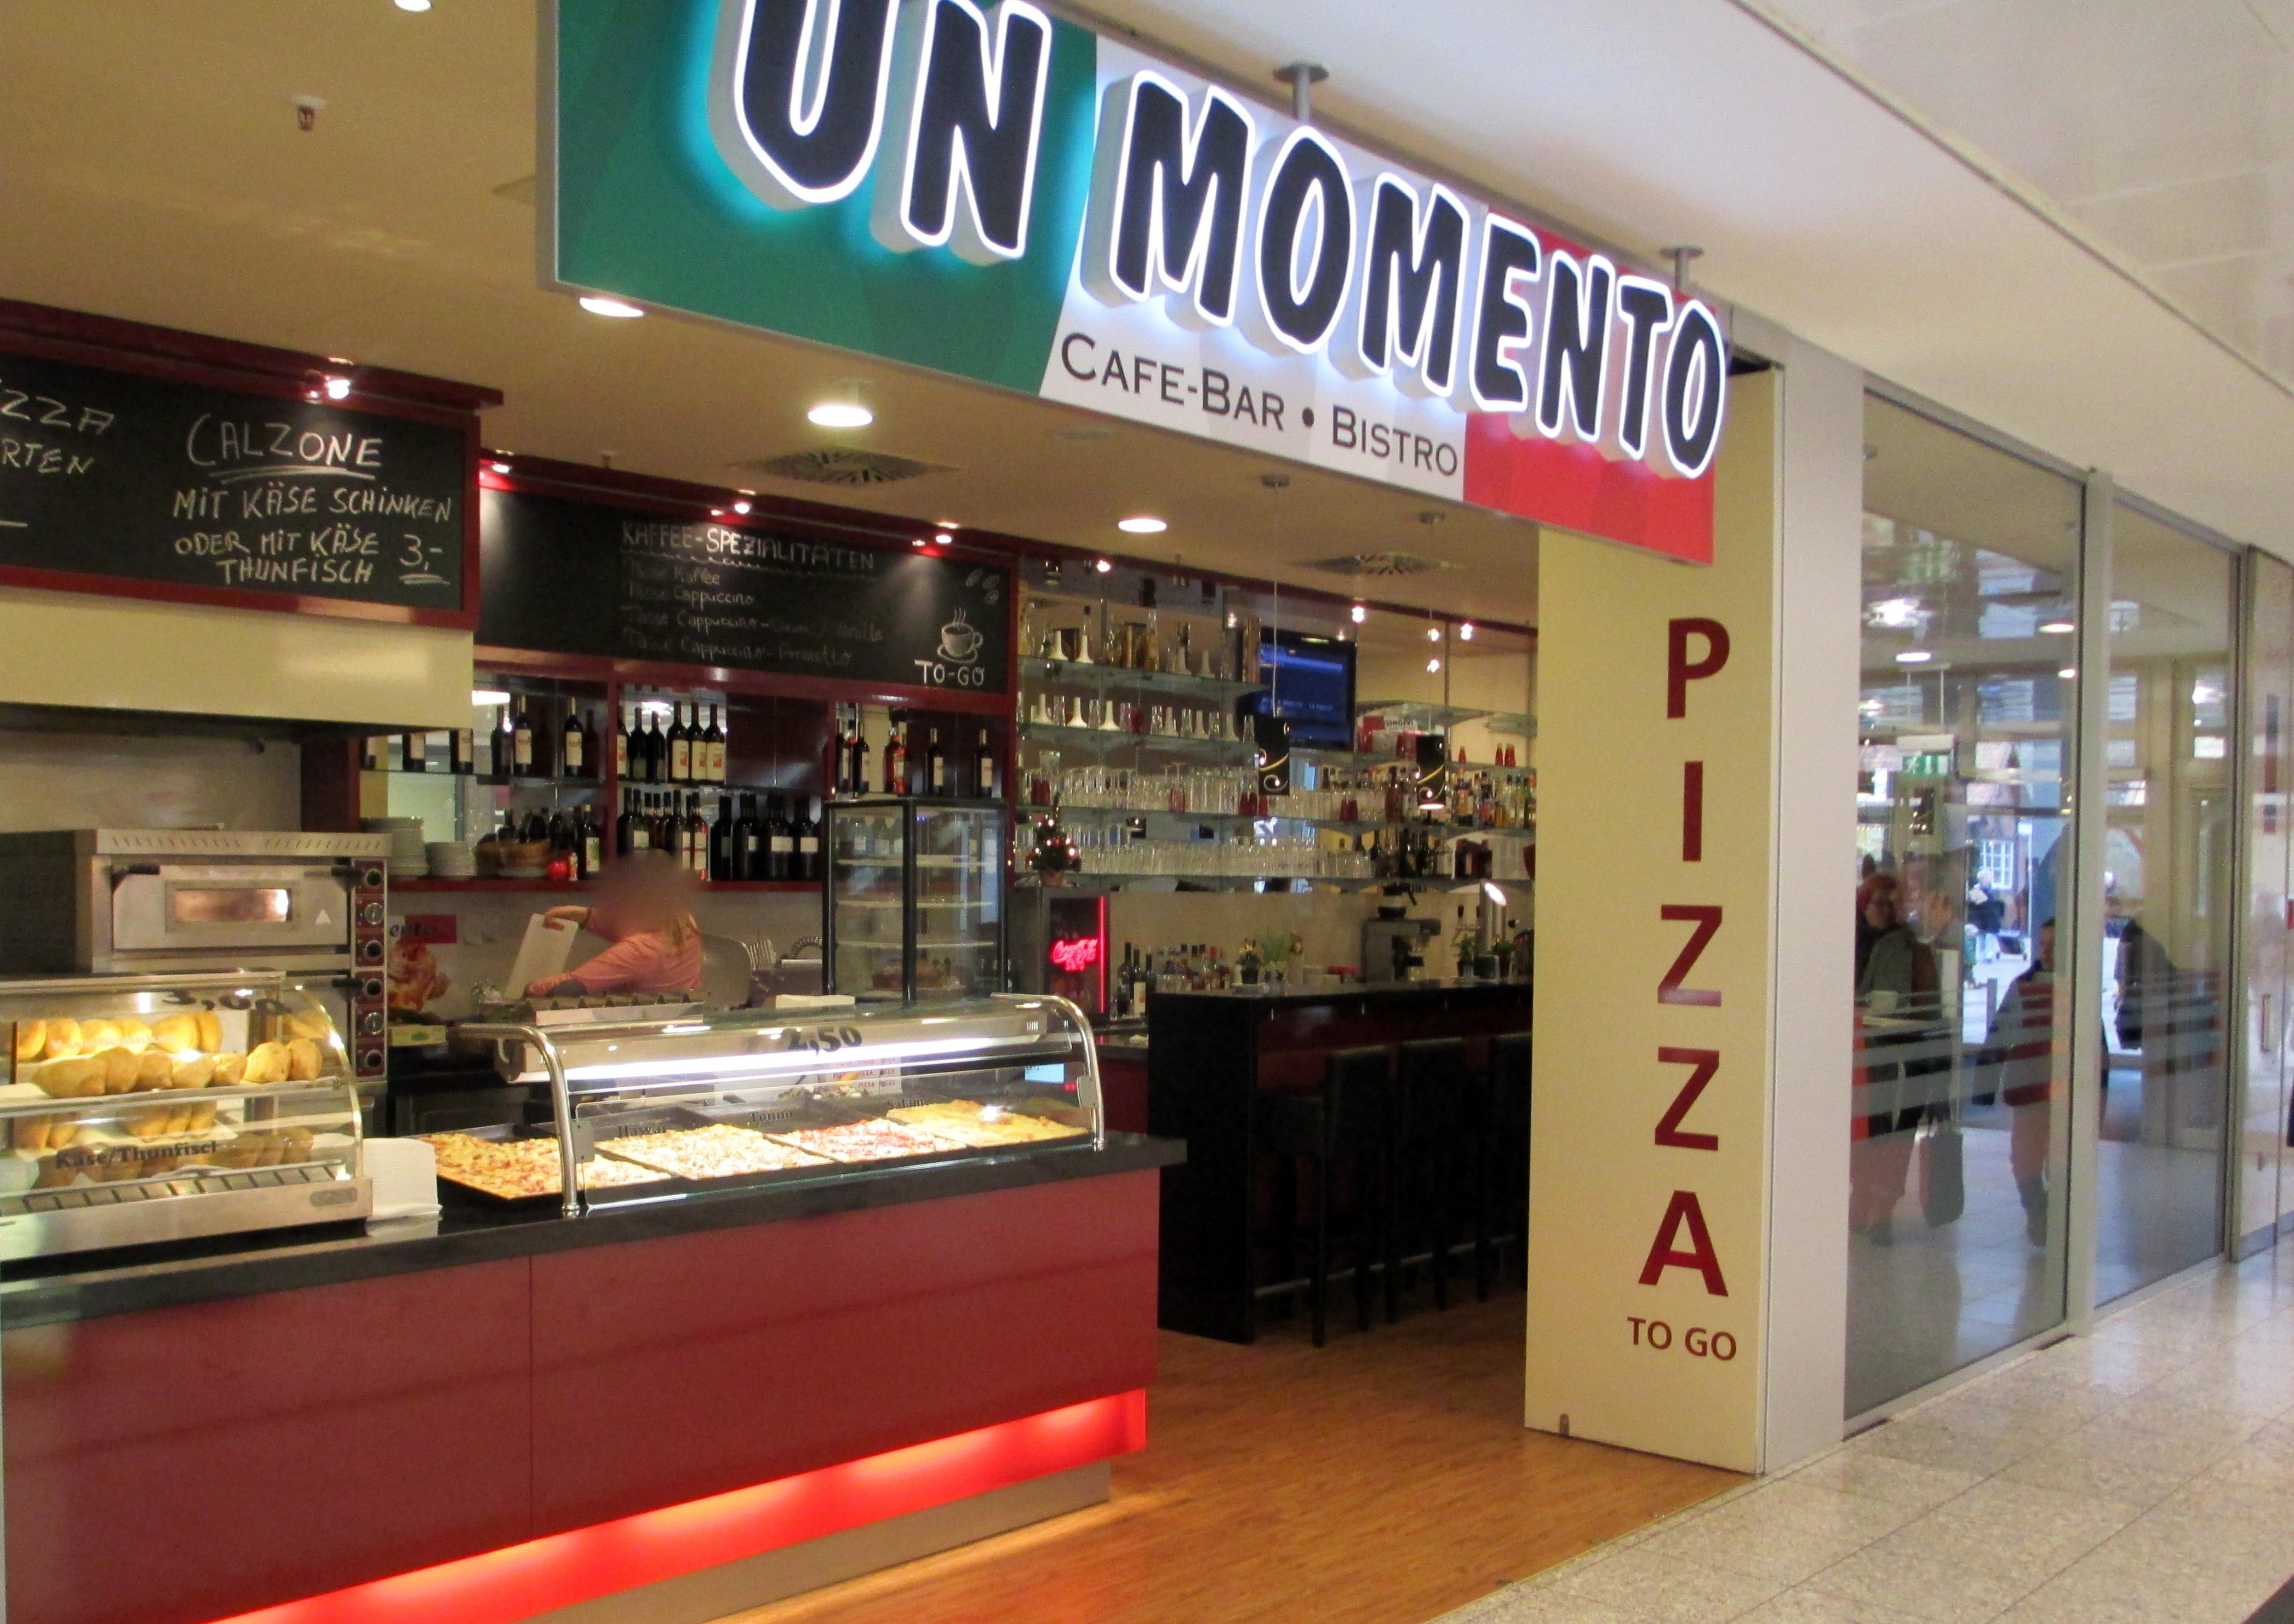 Café Bistro Pizzaria Un Momento, Laatzen